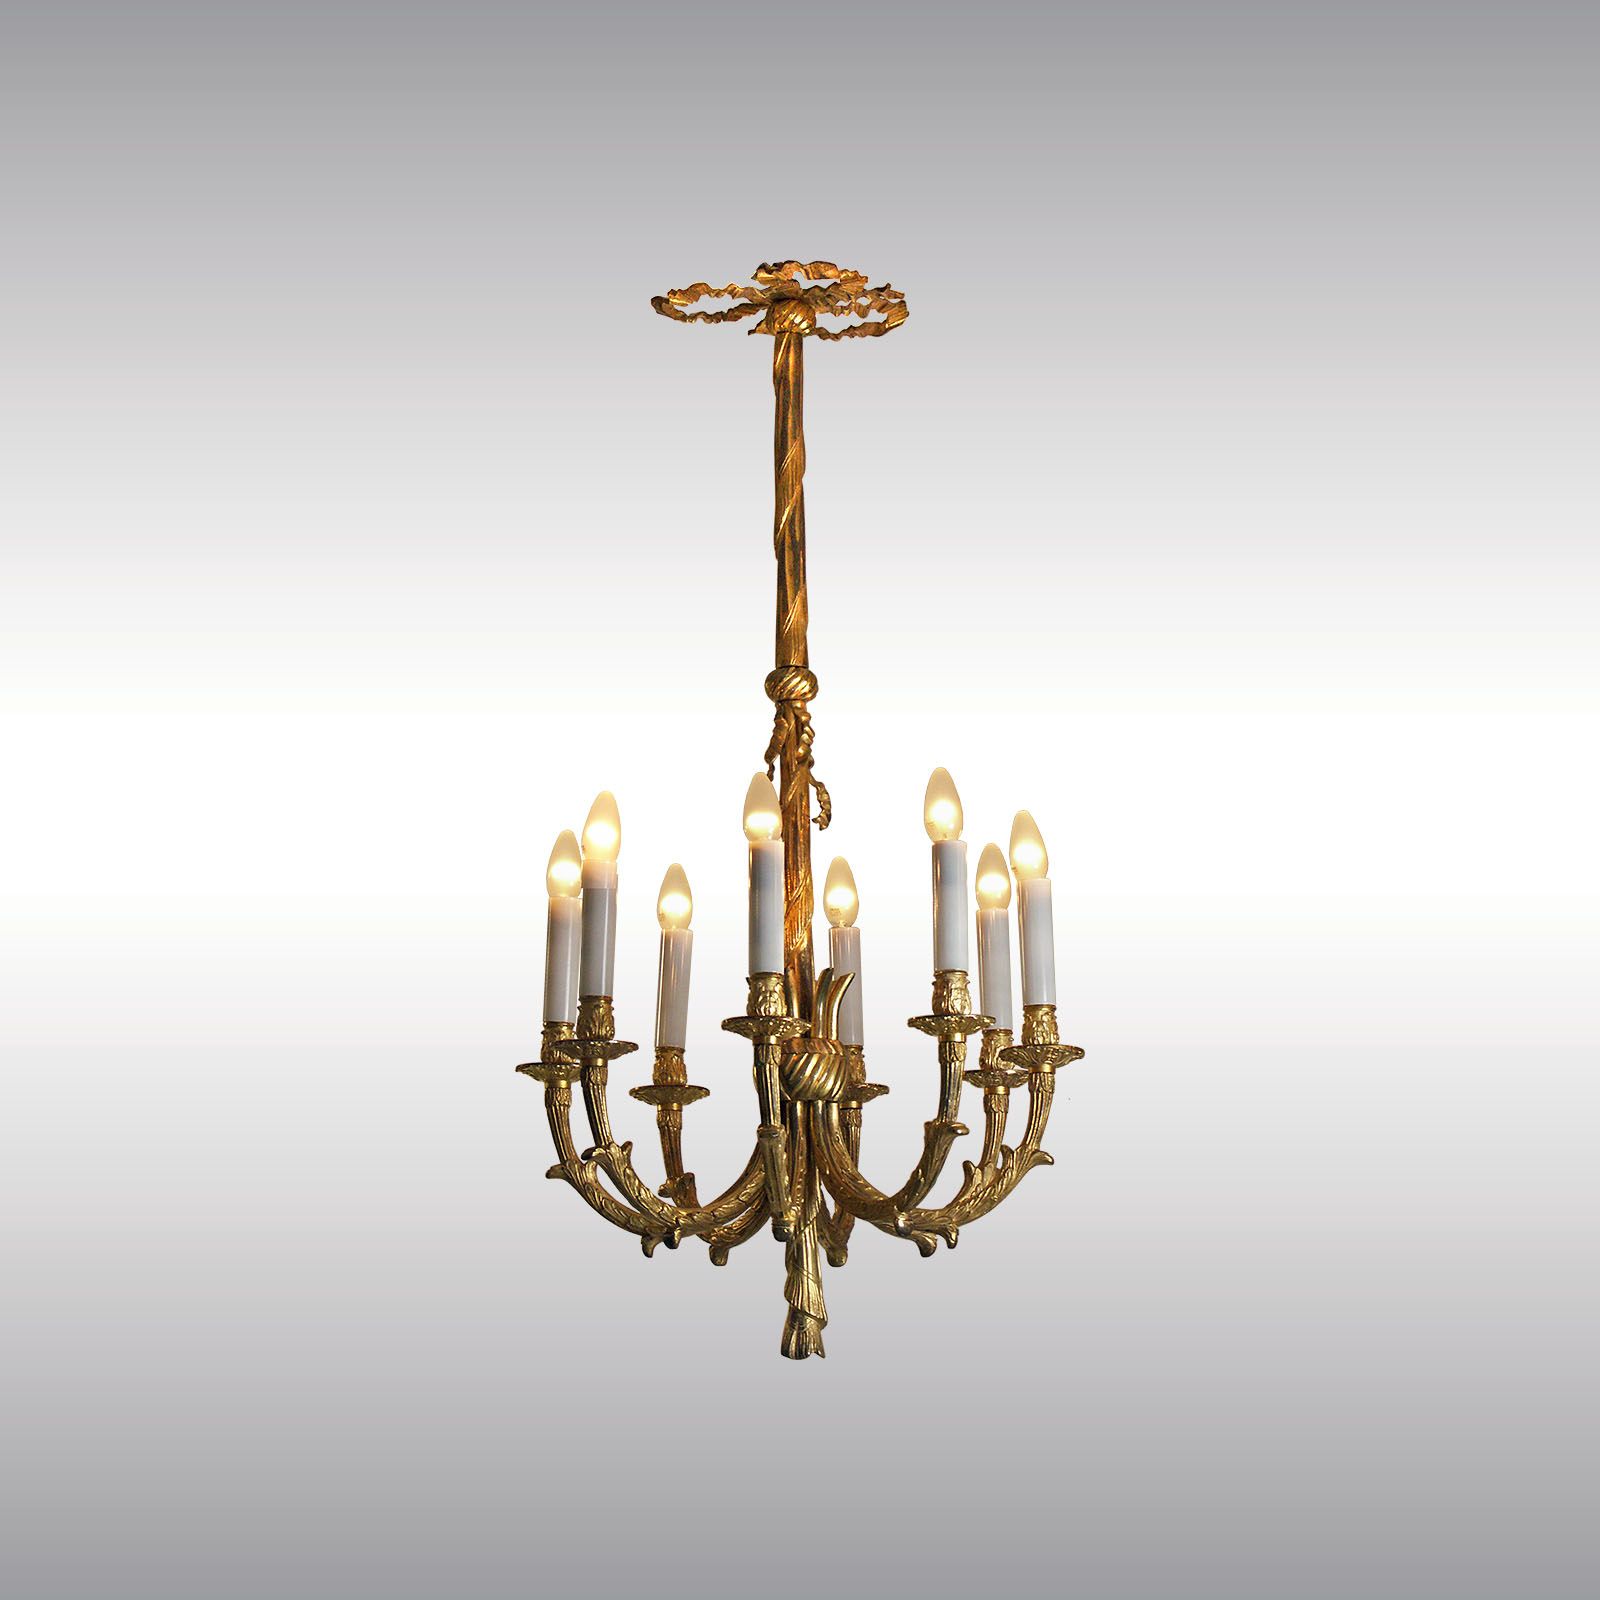 WOKA LAMPS VIENNA - OrderNr.: 4067|Bronzeluster - Design: Austrian Mastercraft